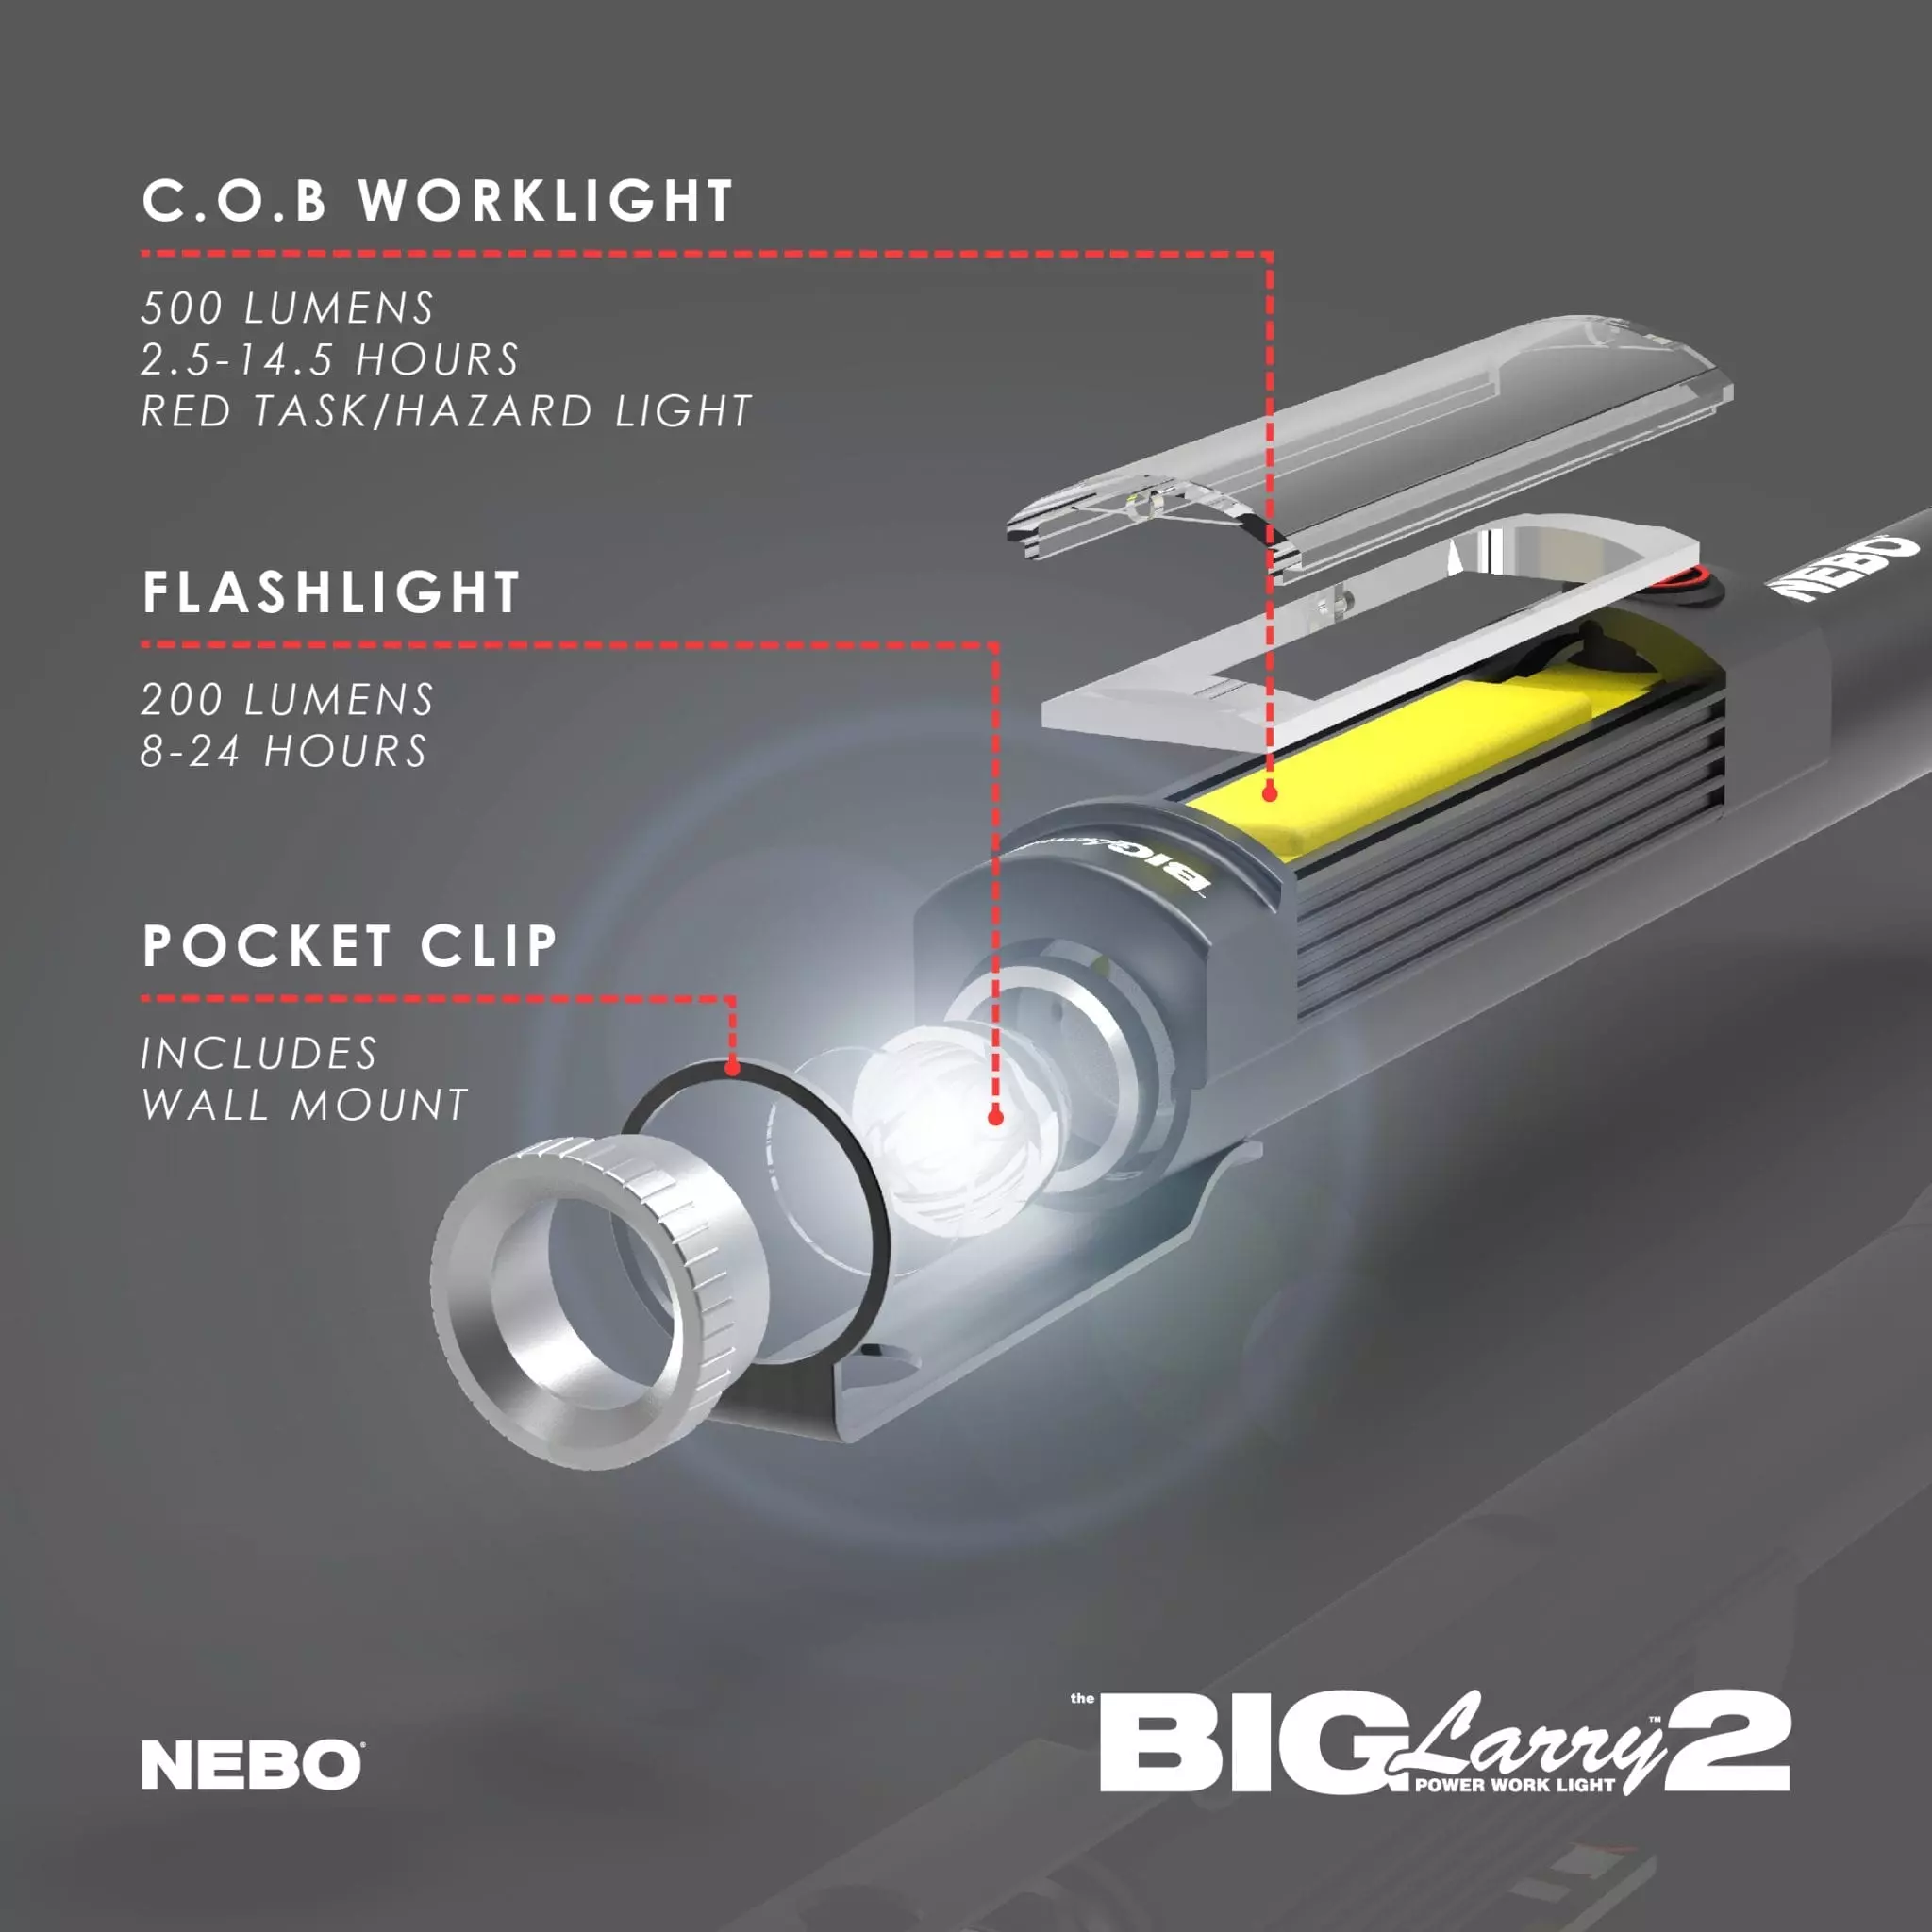 Nebo Big Larry 2 Power Work Light Camera tek